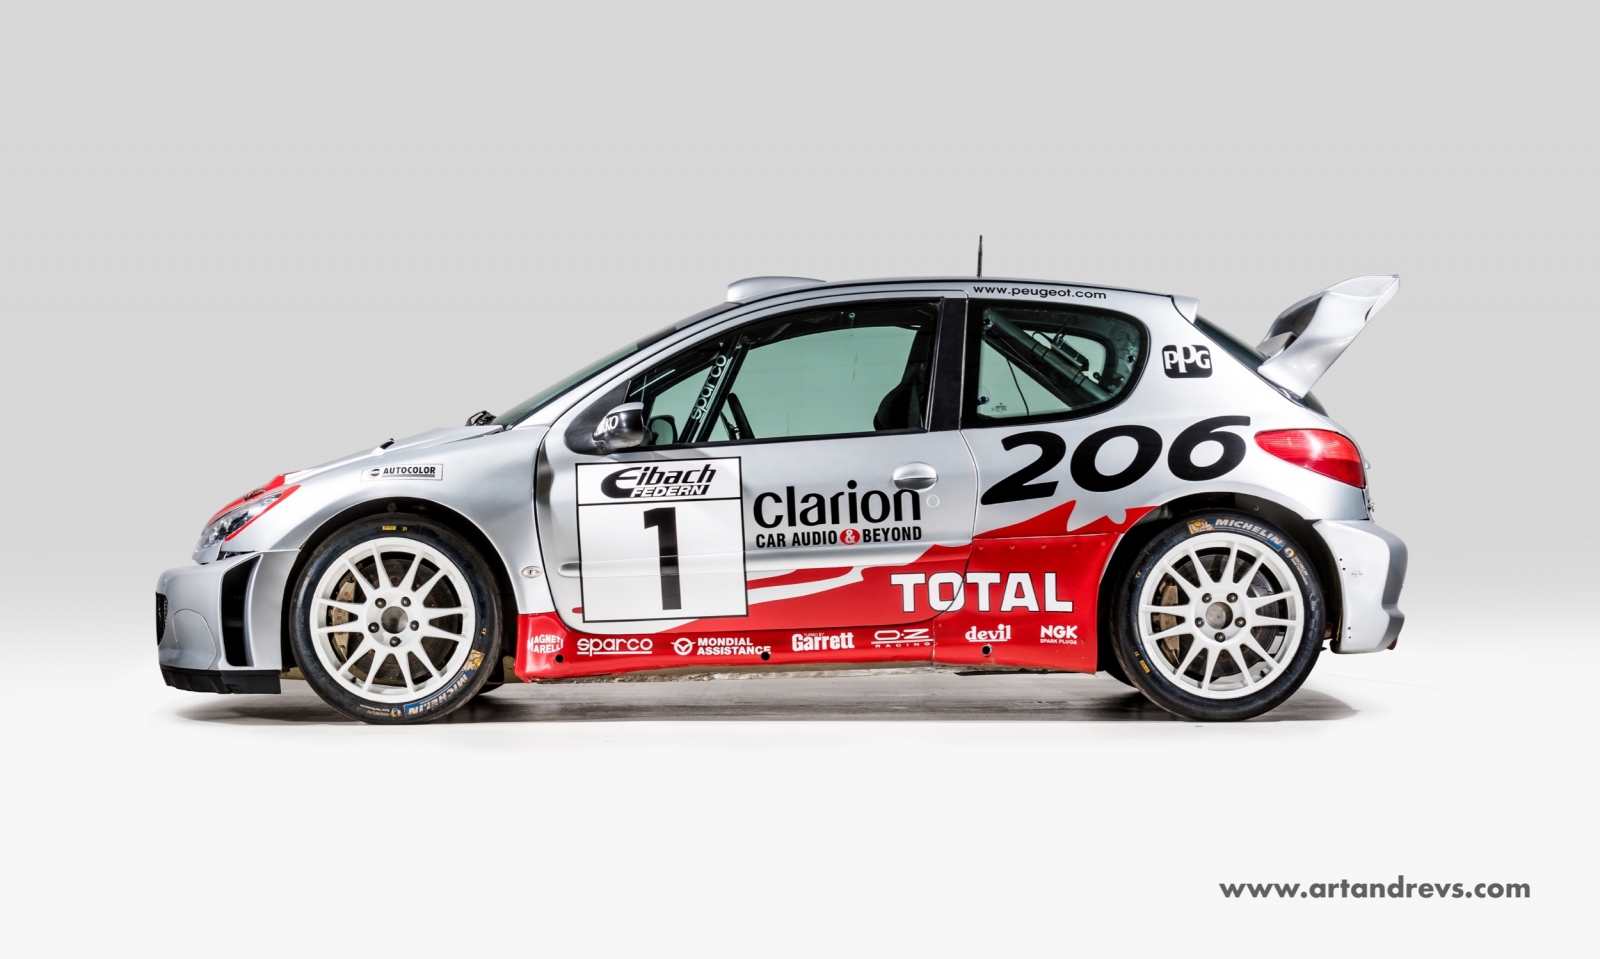 PEUGEOT 206 WRC for sale